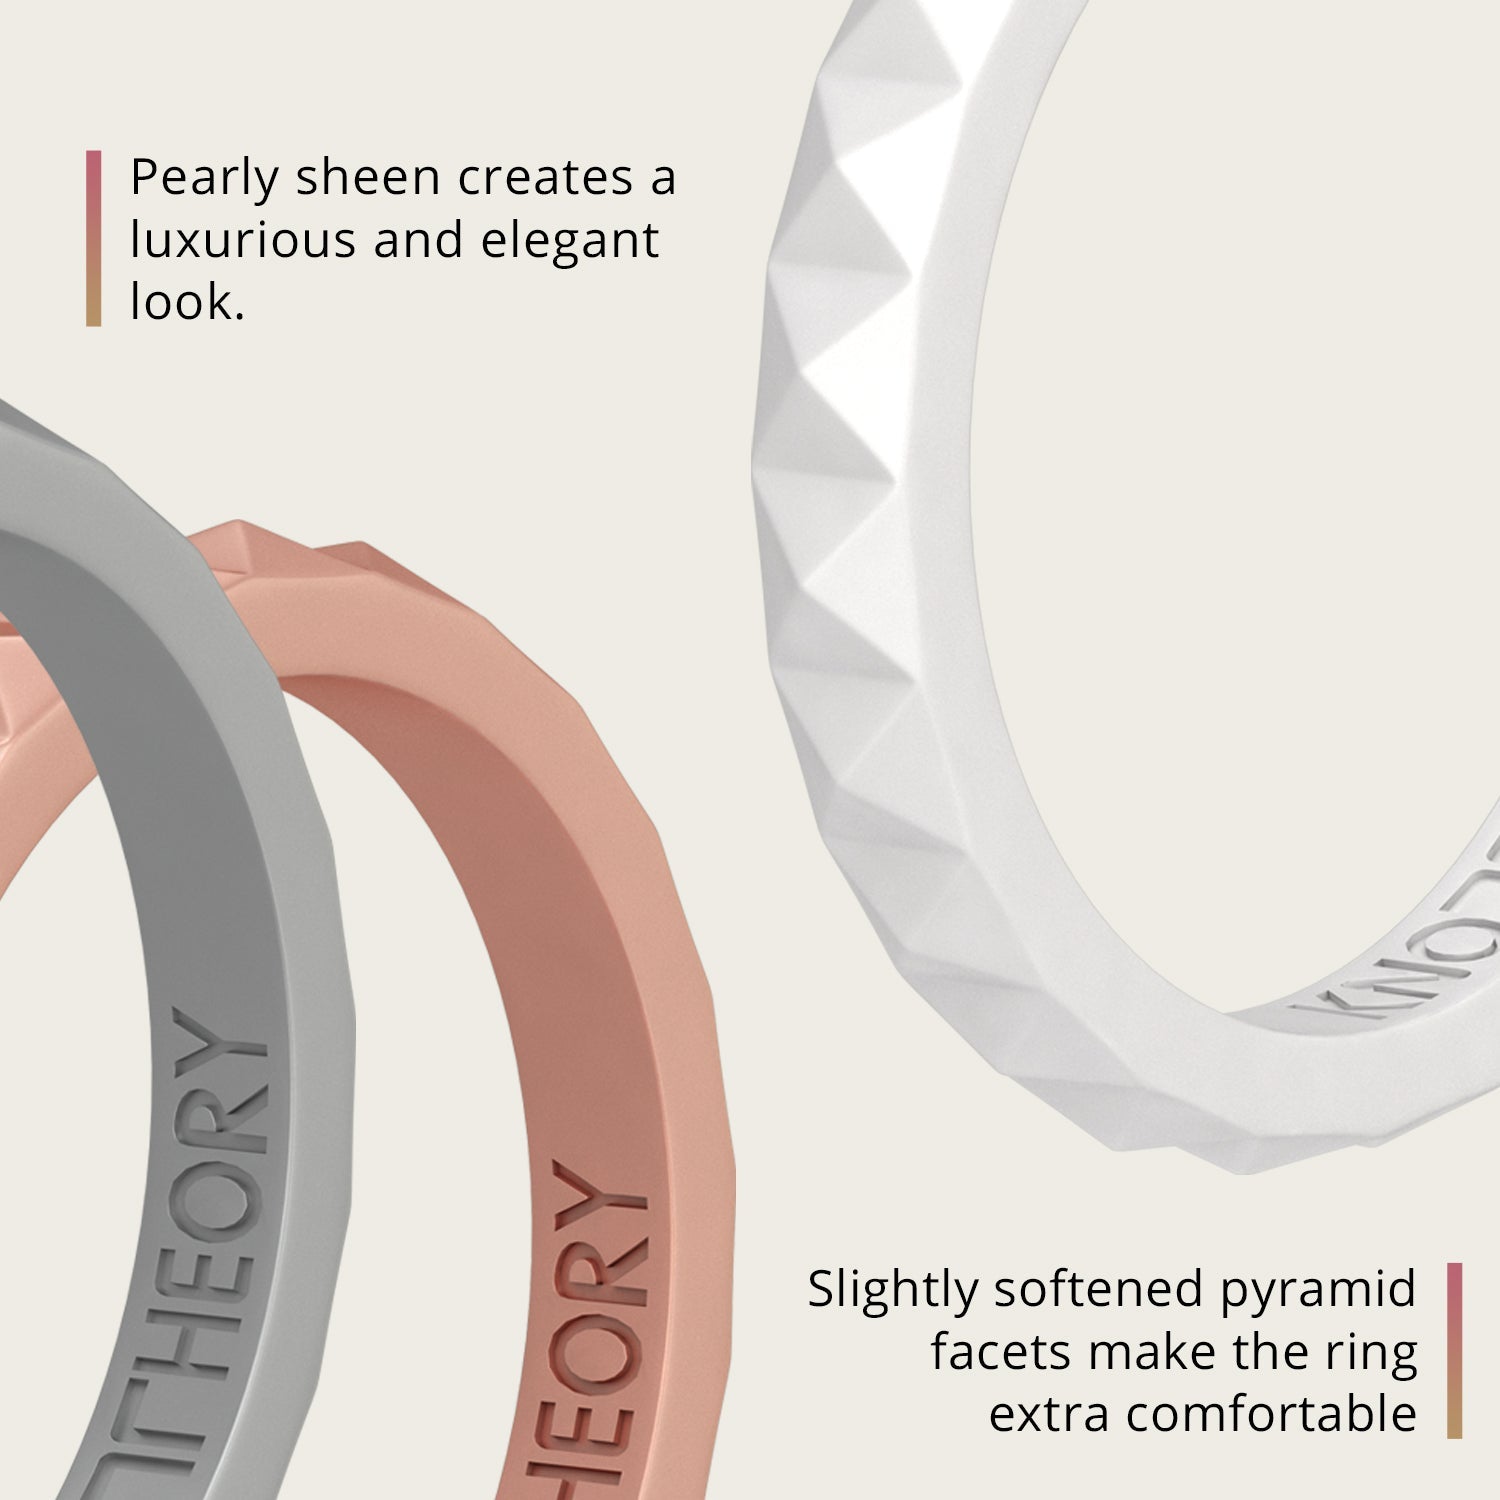 Metallic Fuchsia Tourmaline Pyramid Stackable Slim Thin Silicone Ring for Women - Knot Theory